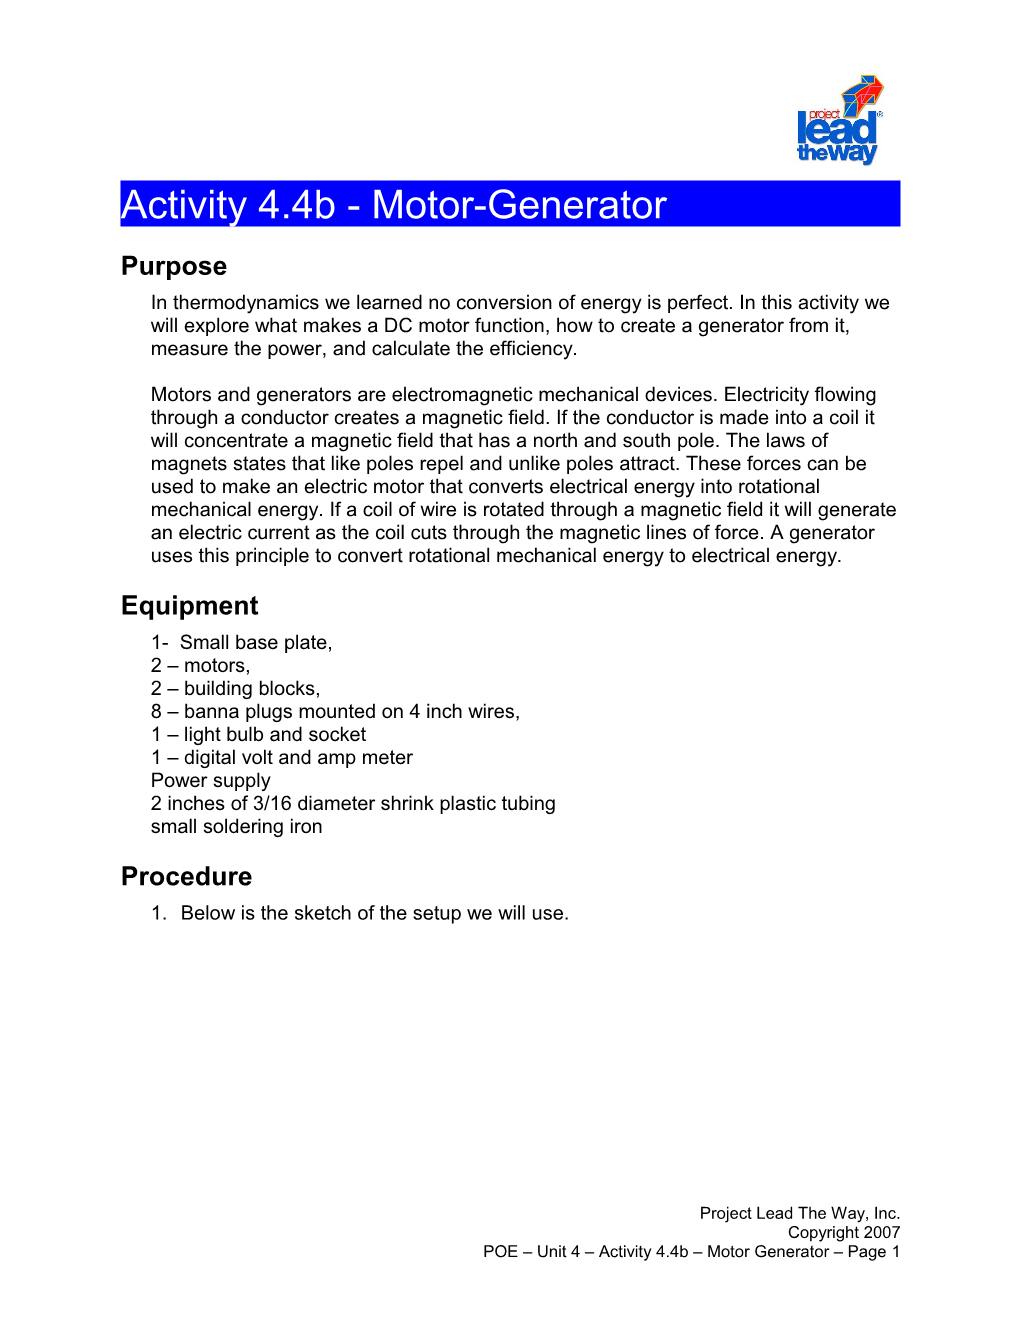 Activity 4.4B - Motor Generator